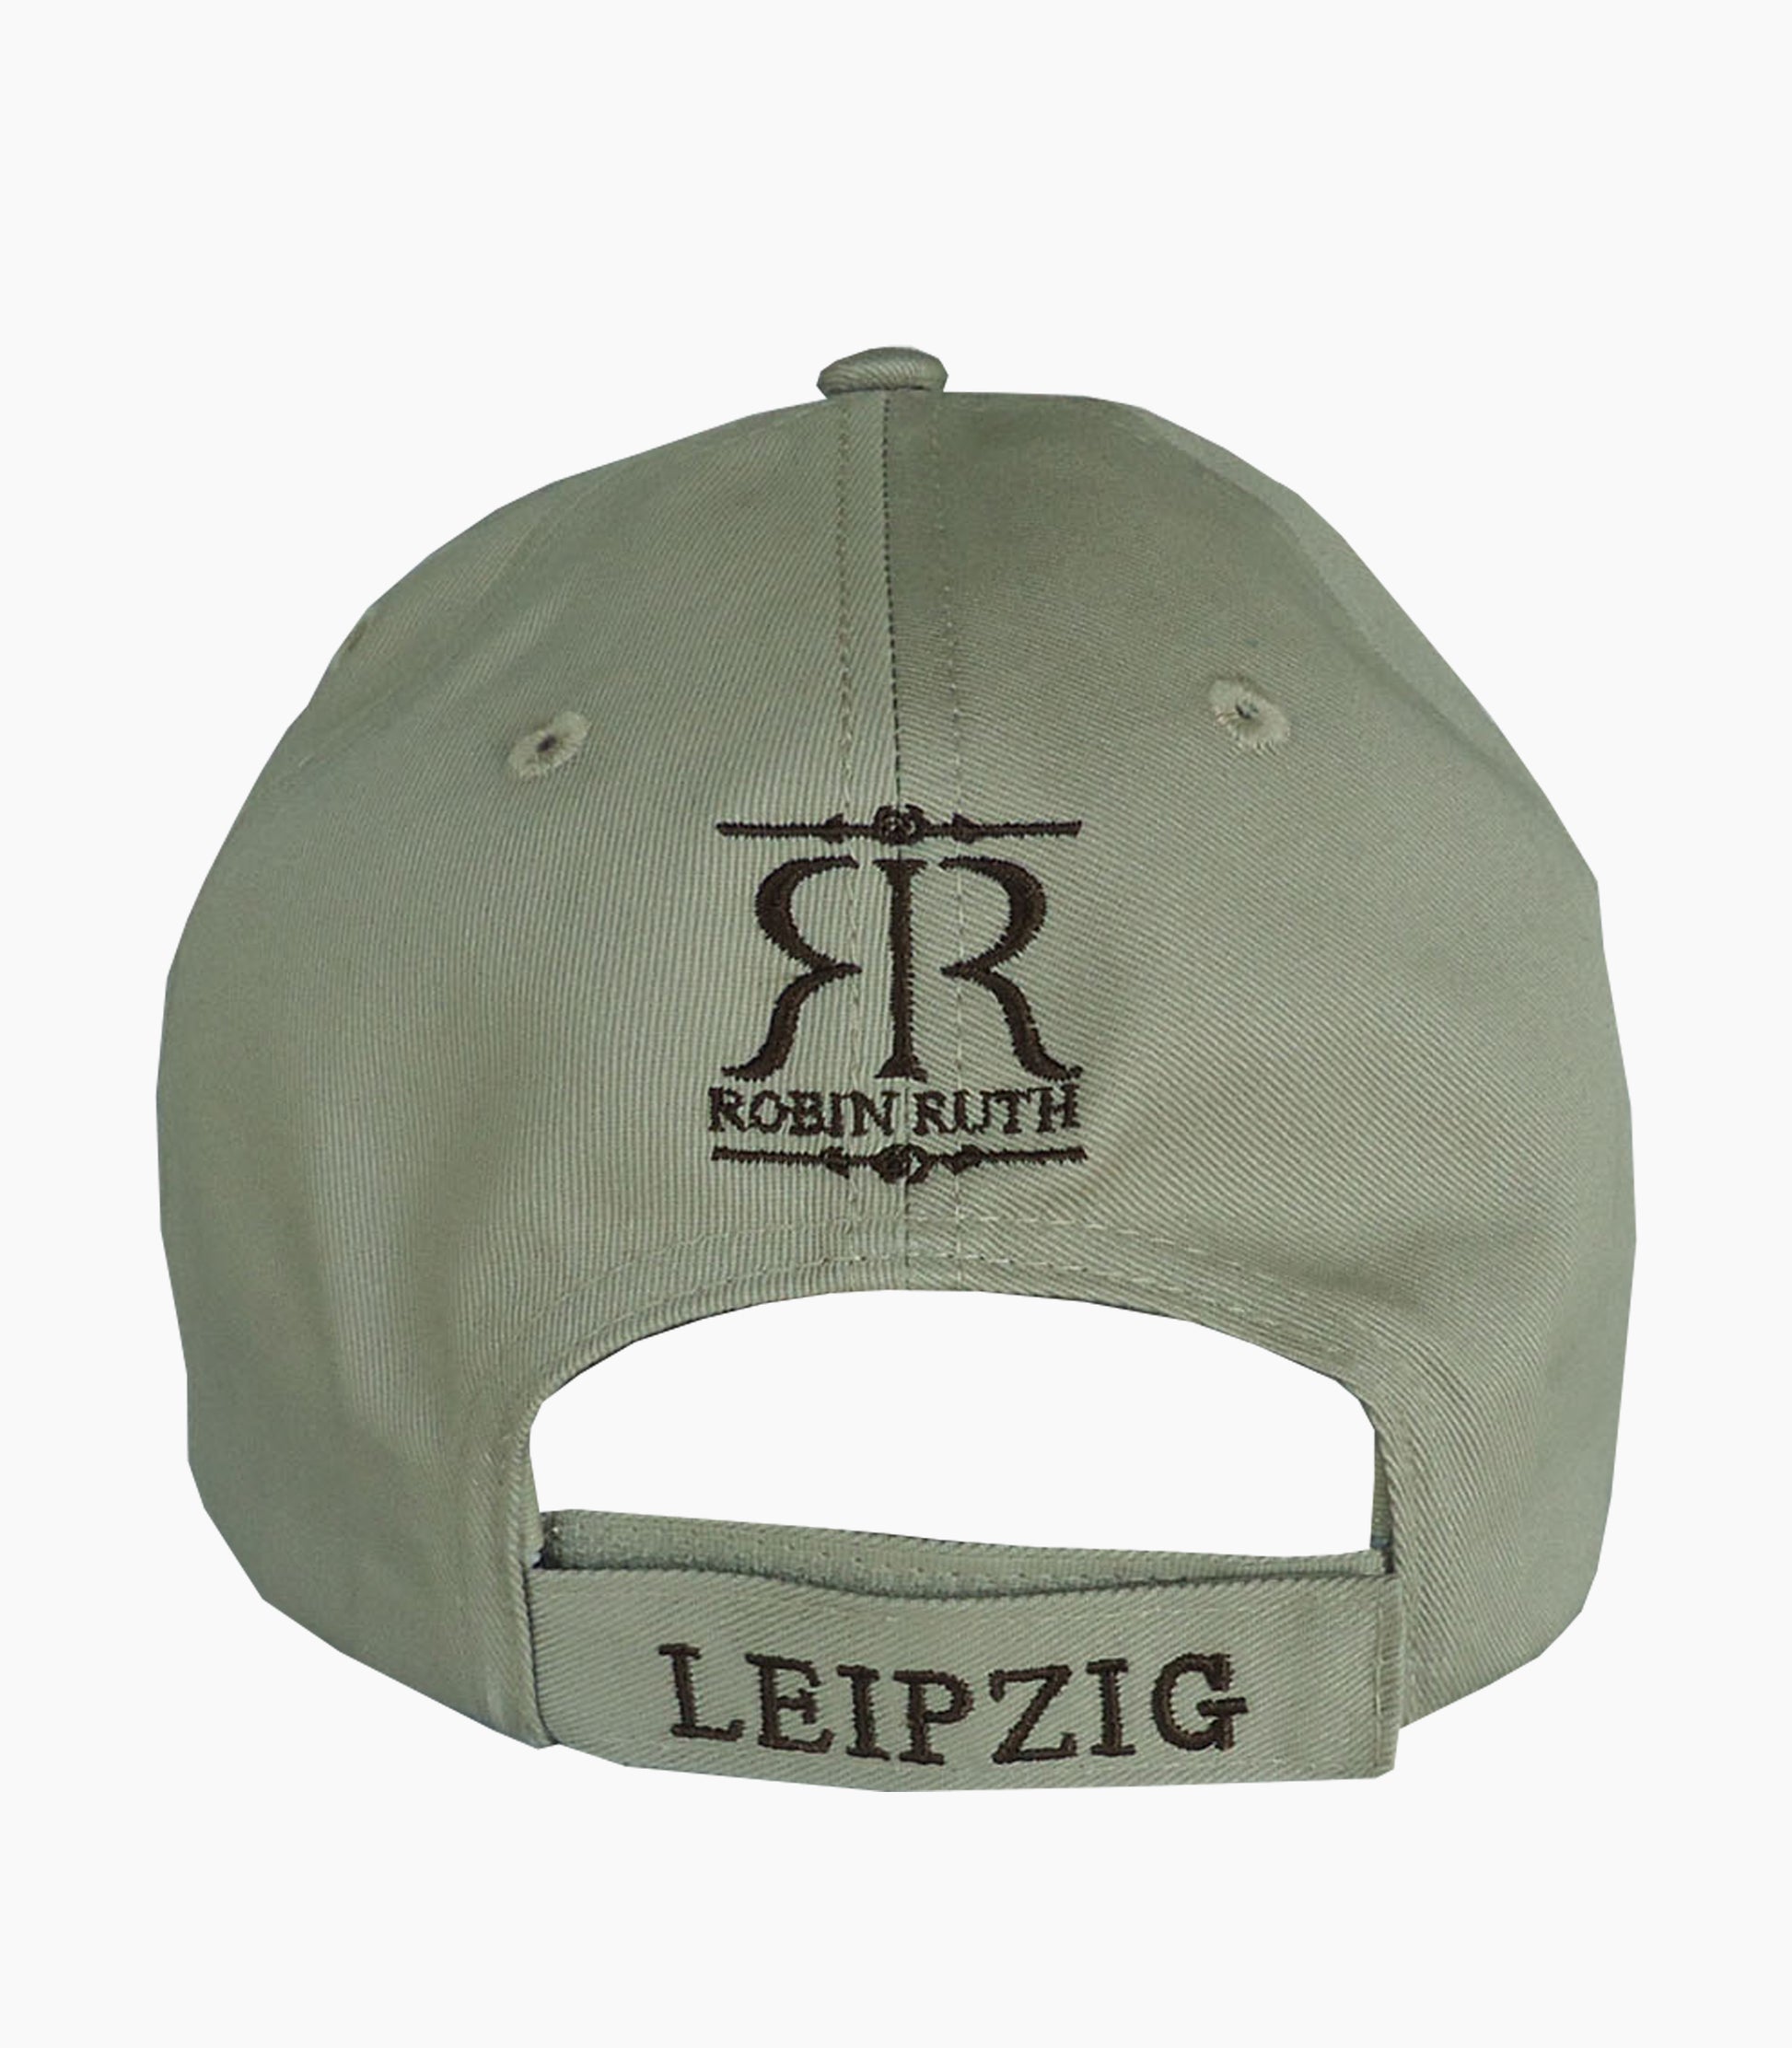 Leipzig Cap - Robin Ruth